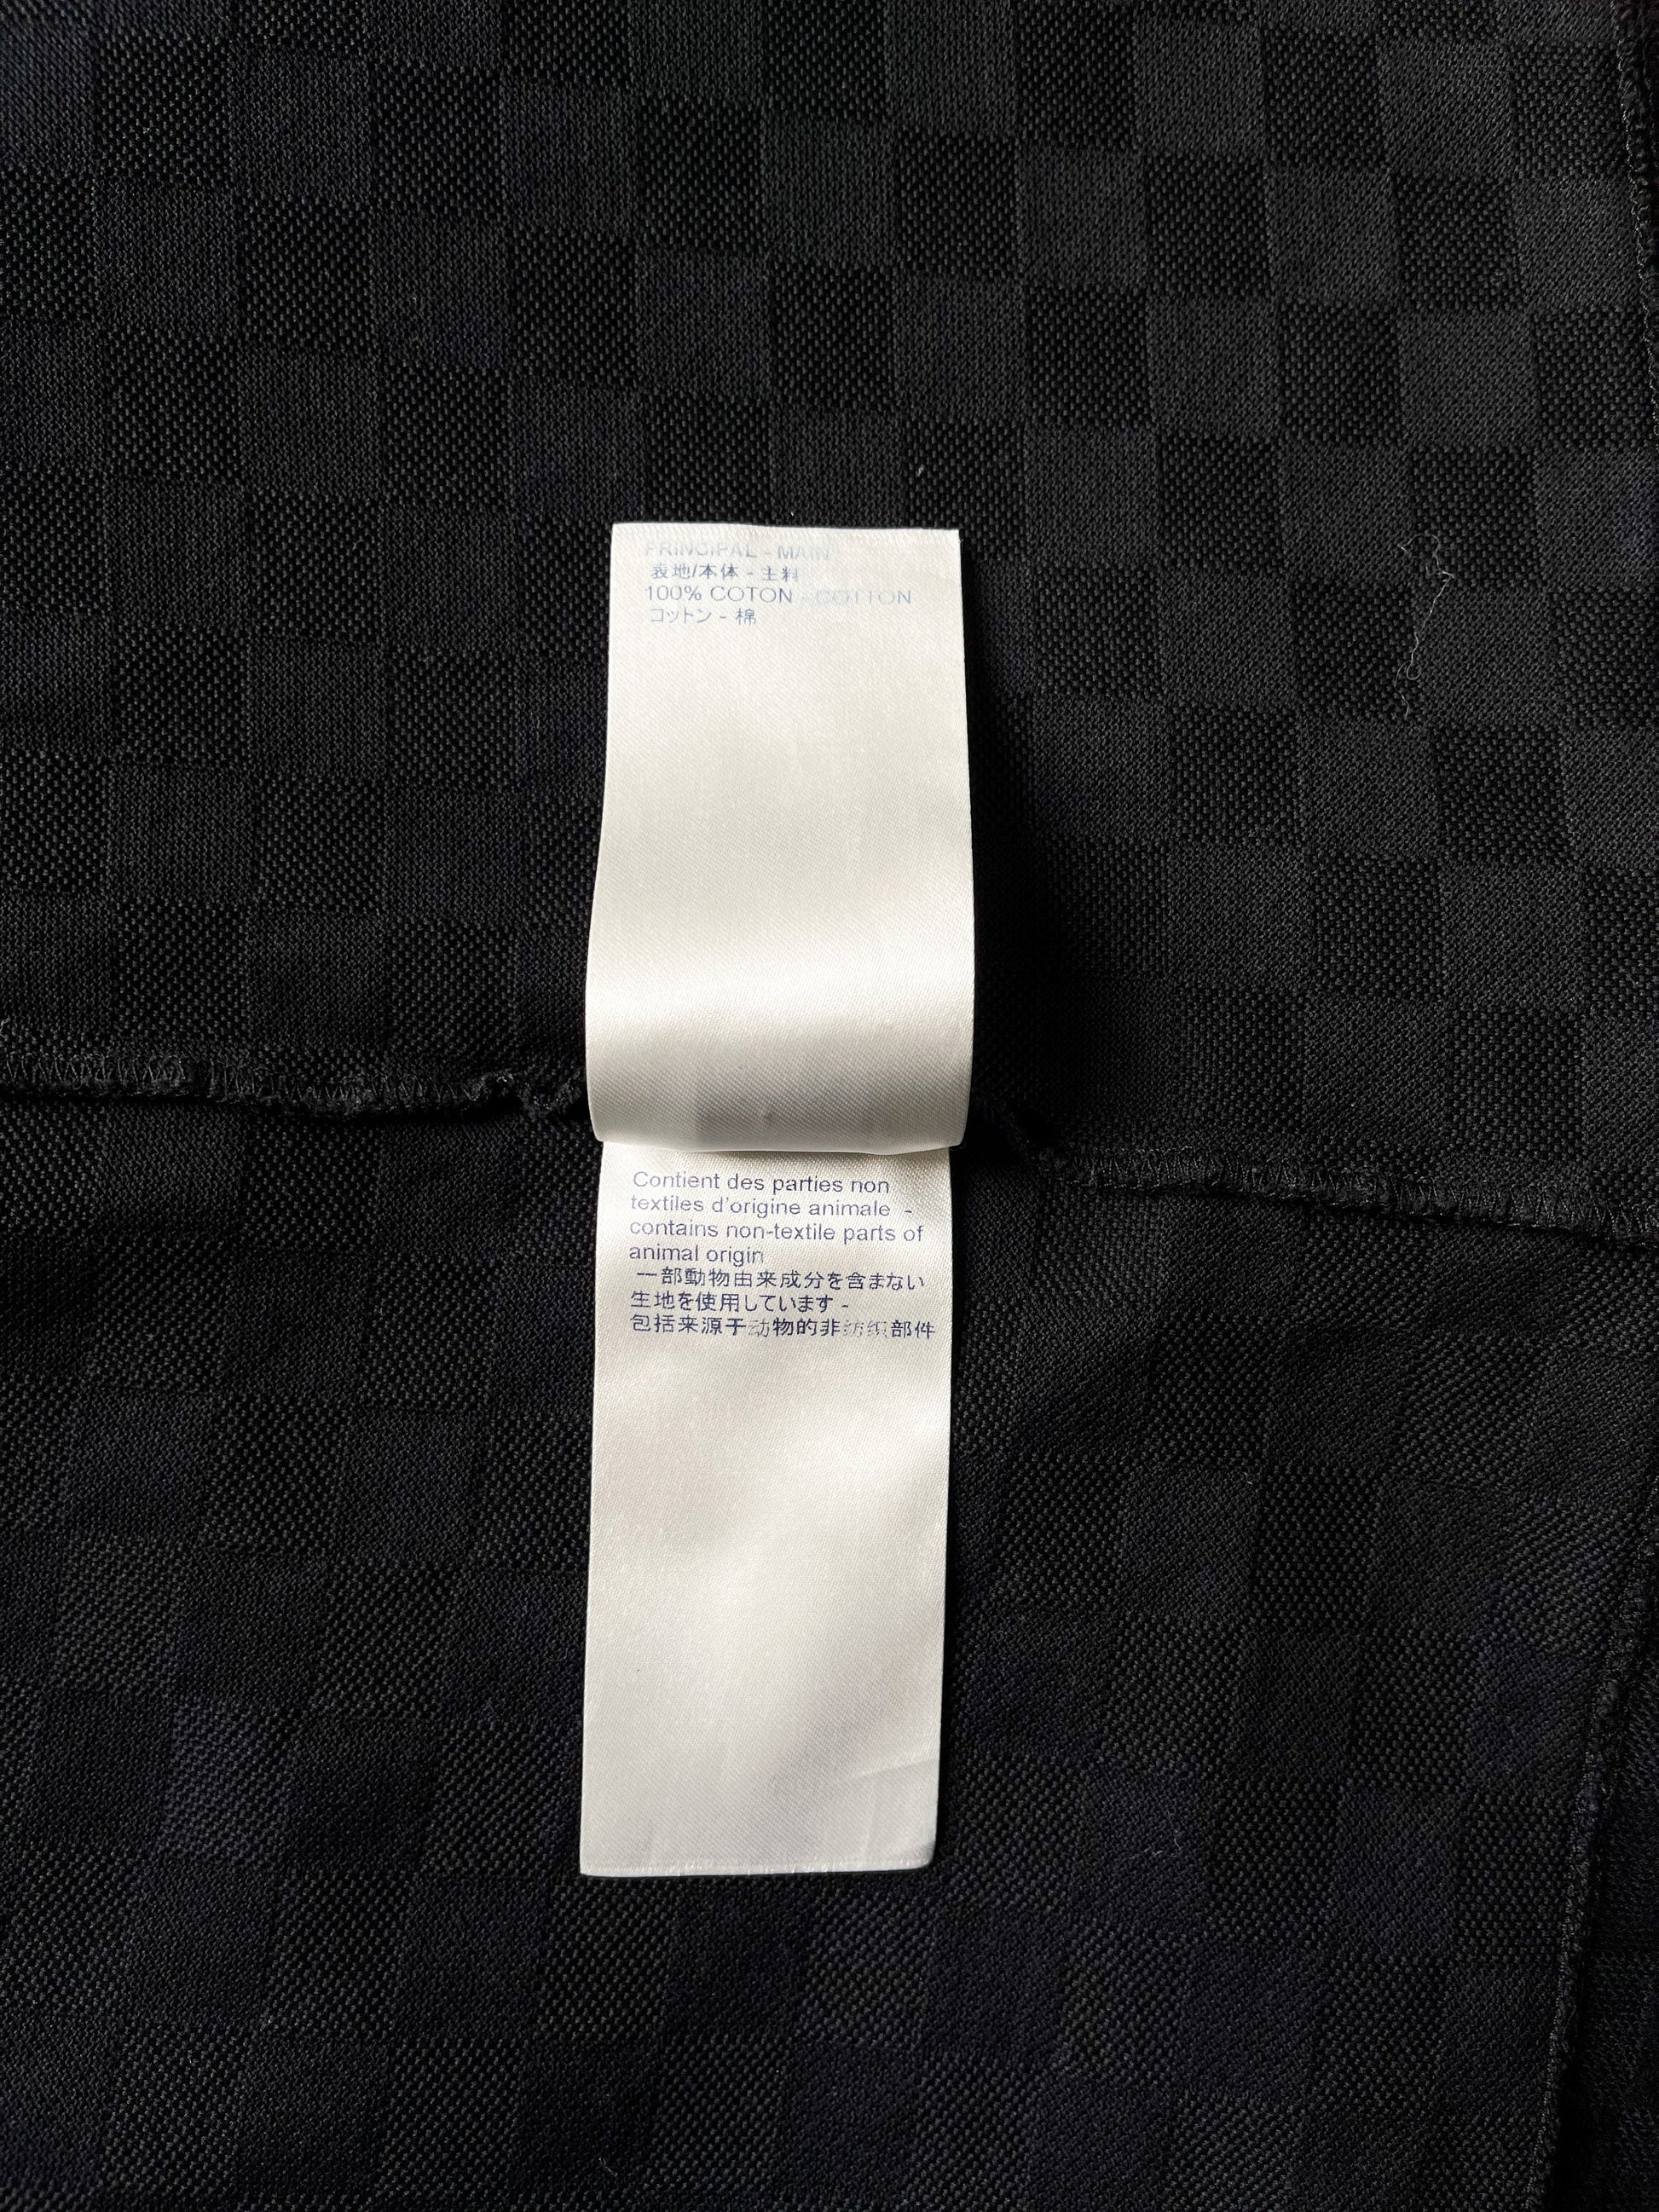 Louis Vuitton Red Cotton Damier Pocket Detail Polo T-Shirt S